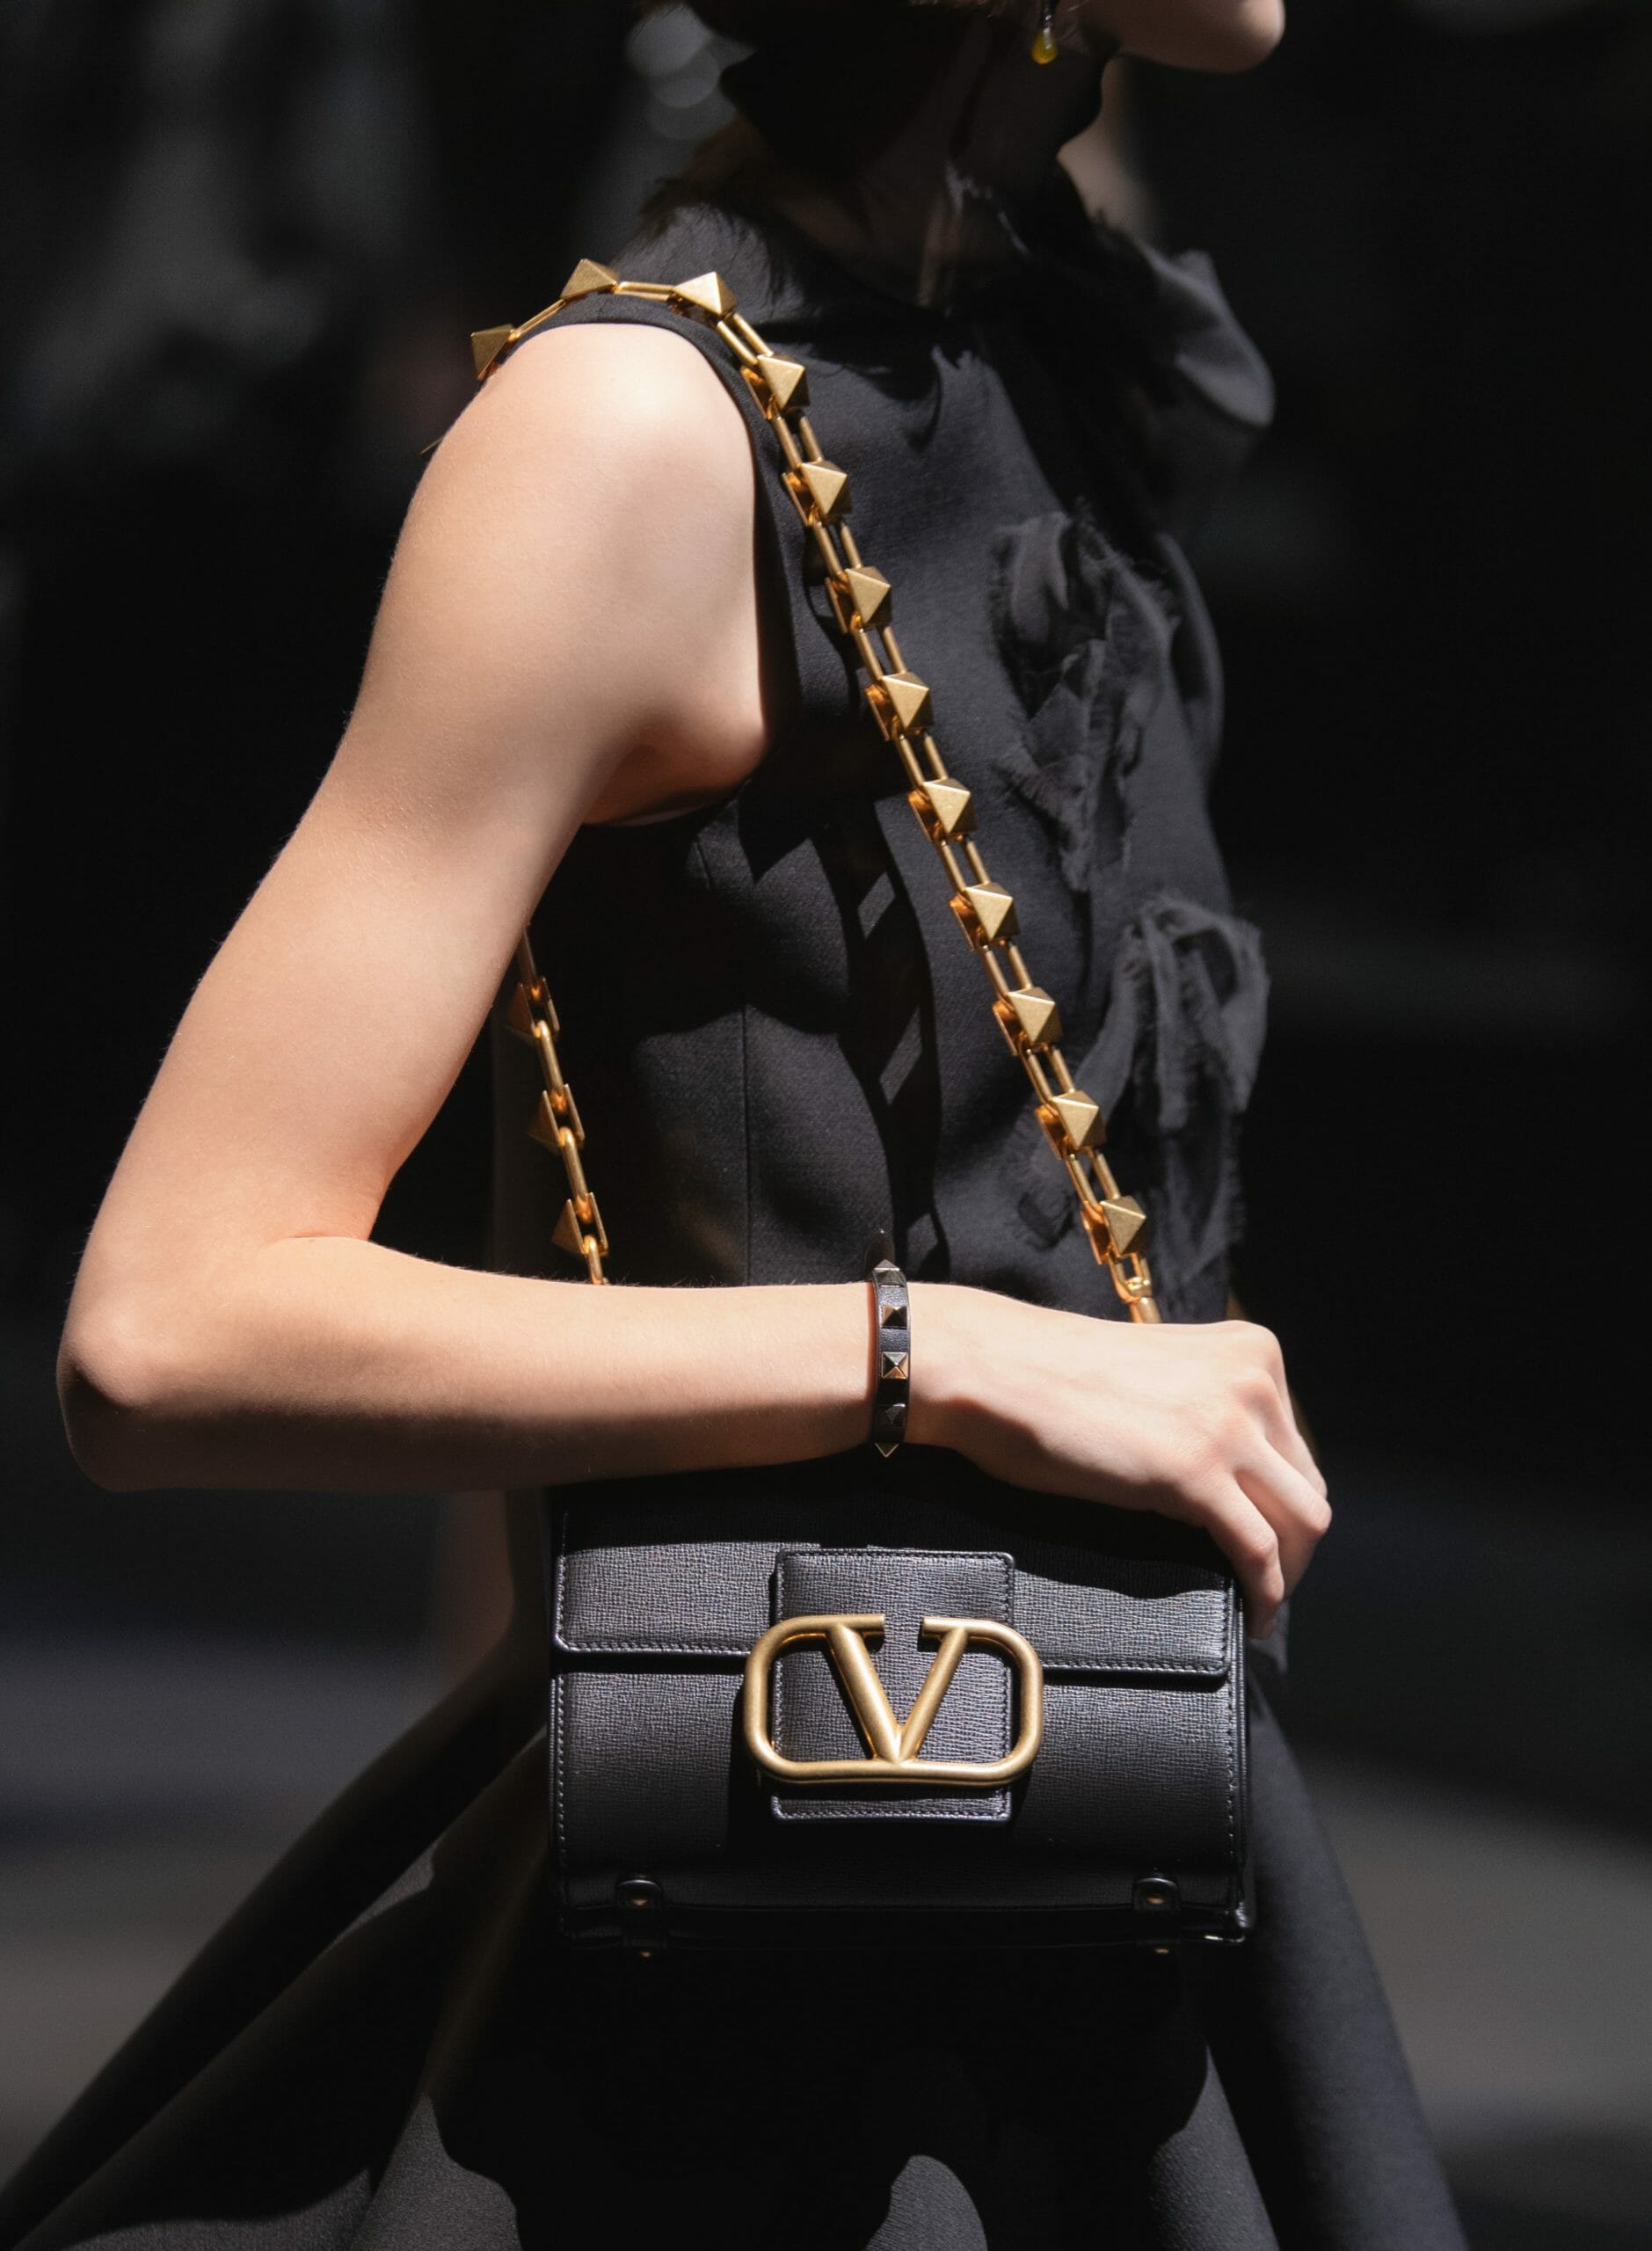 The New Valentino Garavani Accessories Are Modern-Day Staples